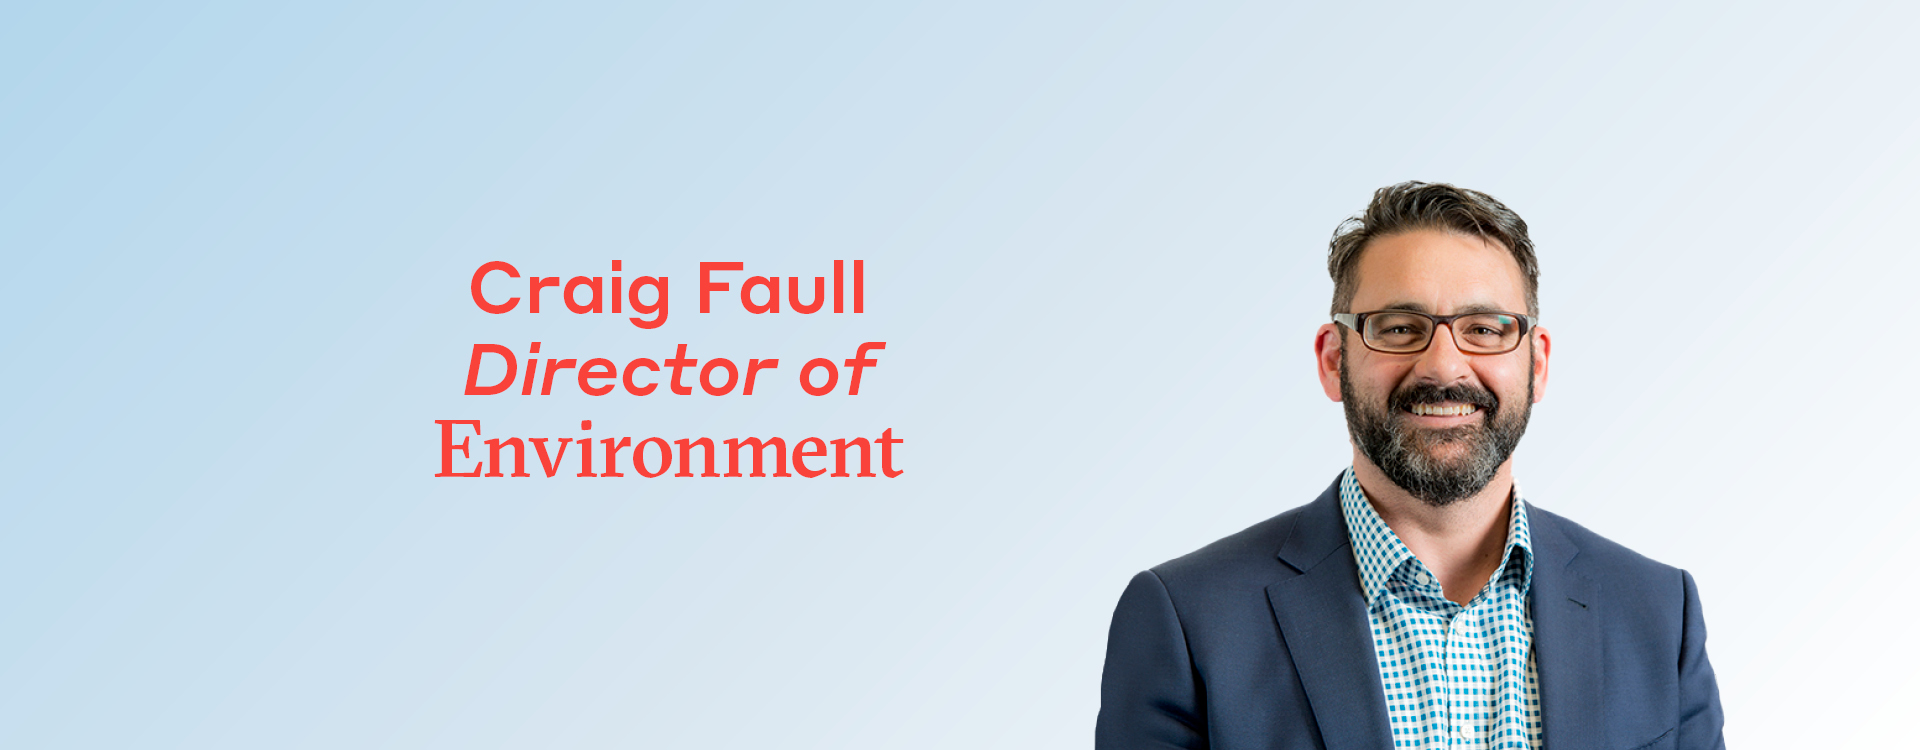 bnr-craig-faull-director-environment-appointment